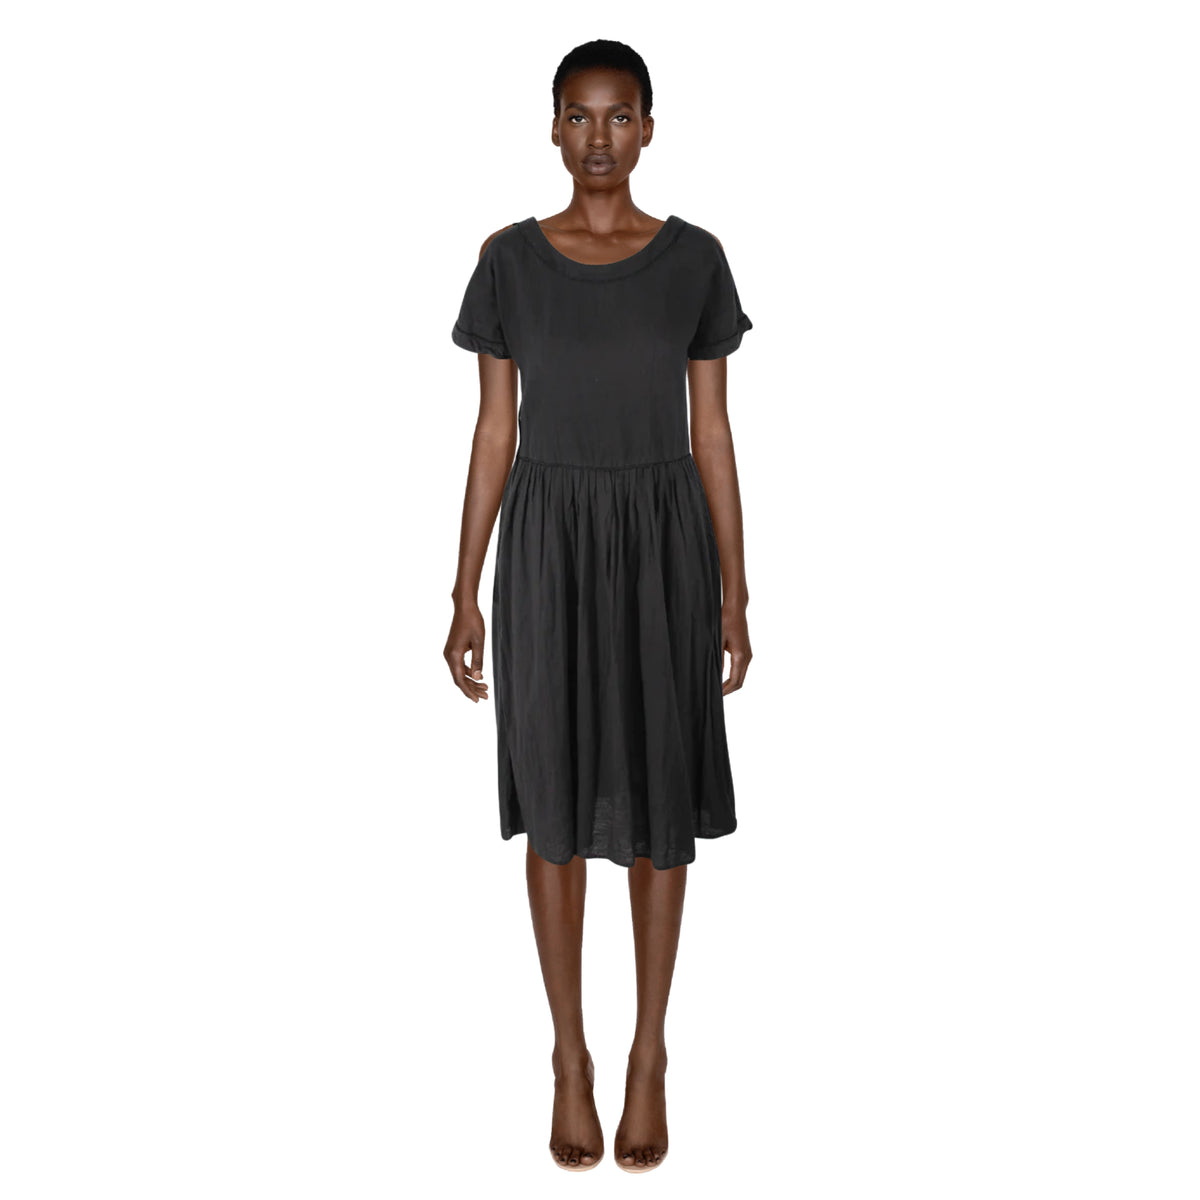 SAKS FIFTH AVENUE Vintage Black Dress |  Size 6 - M/L